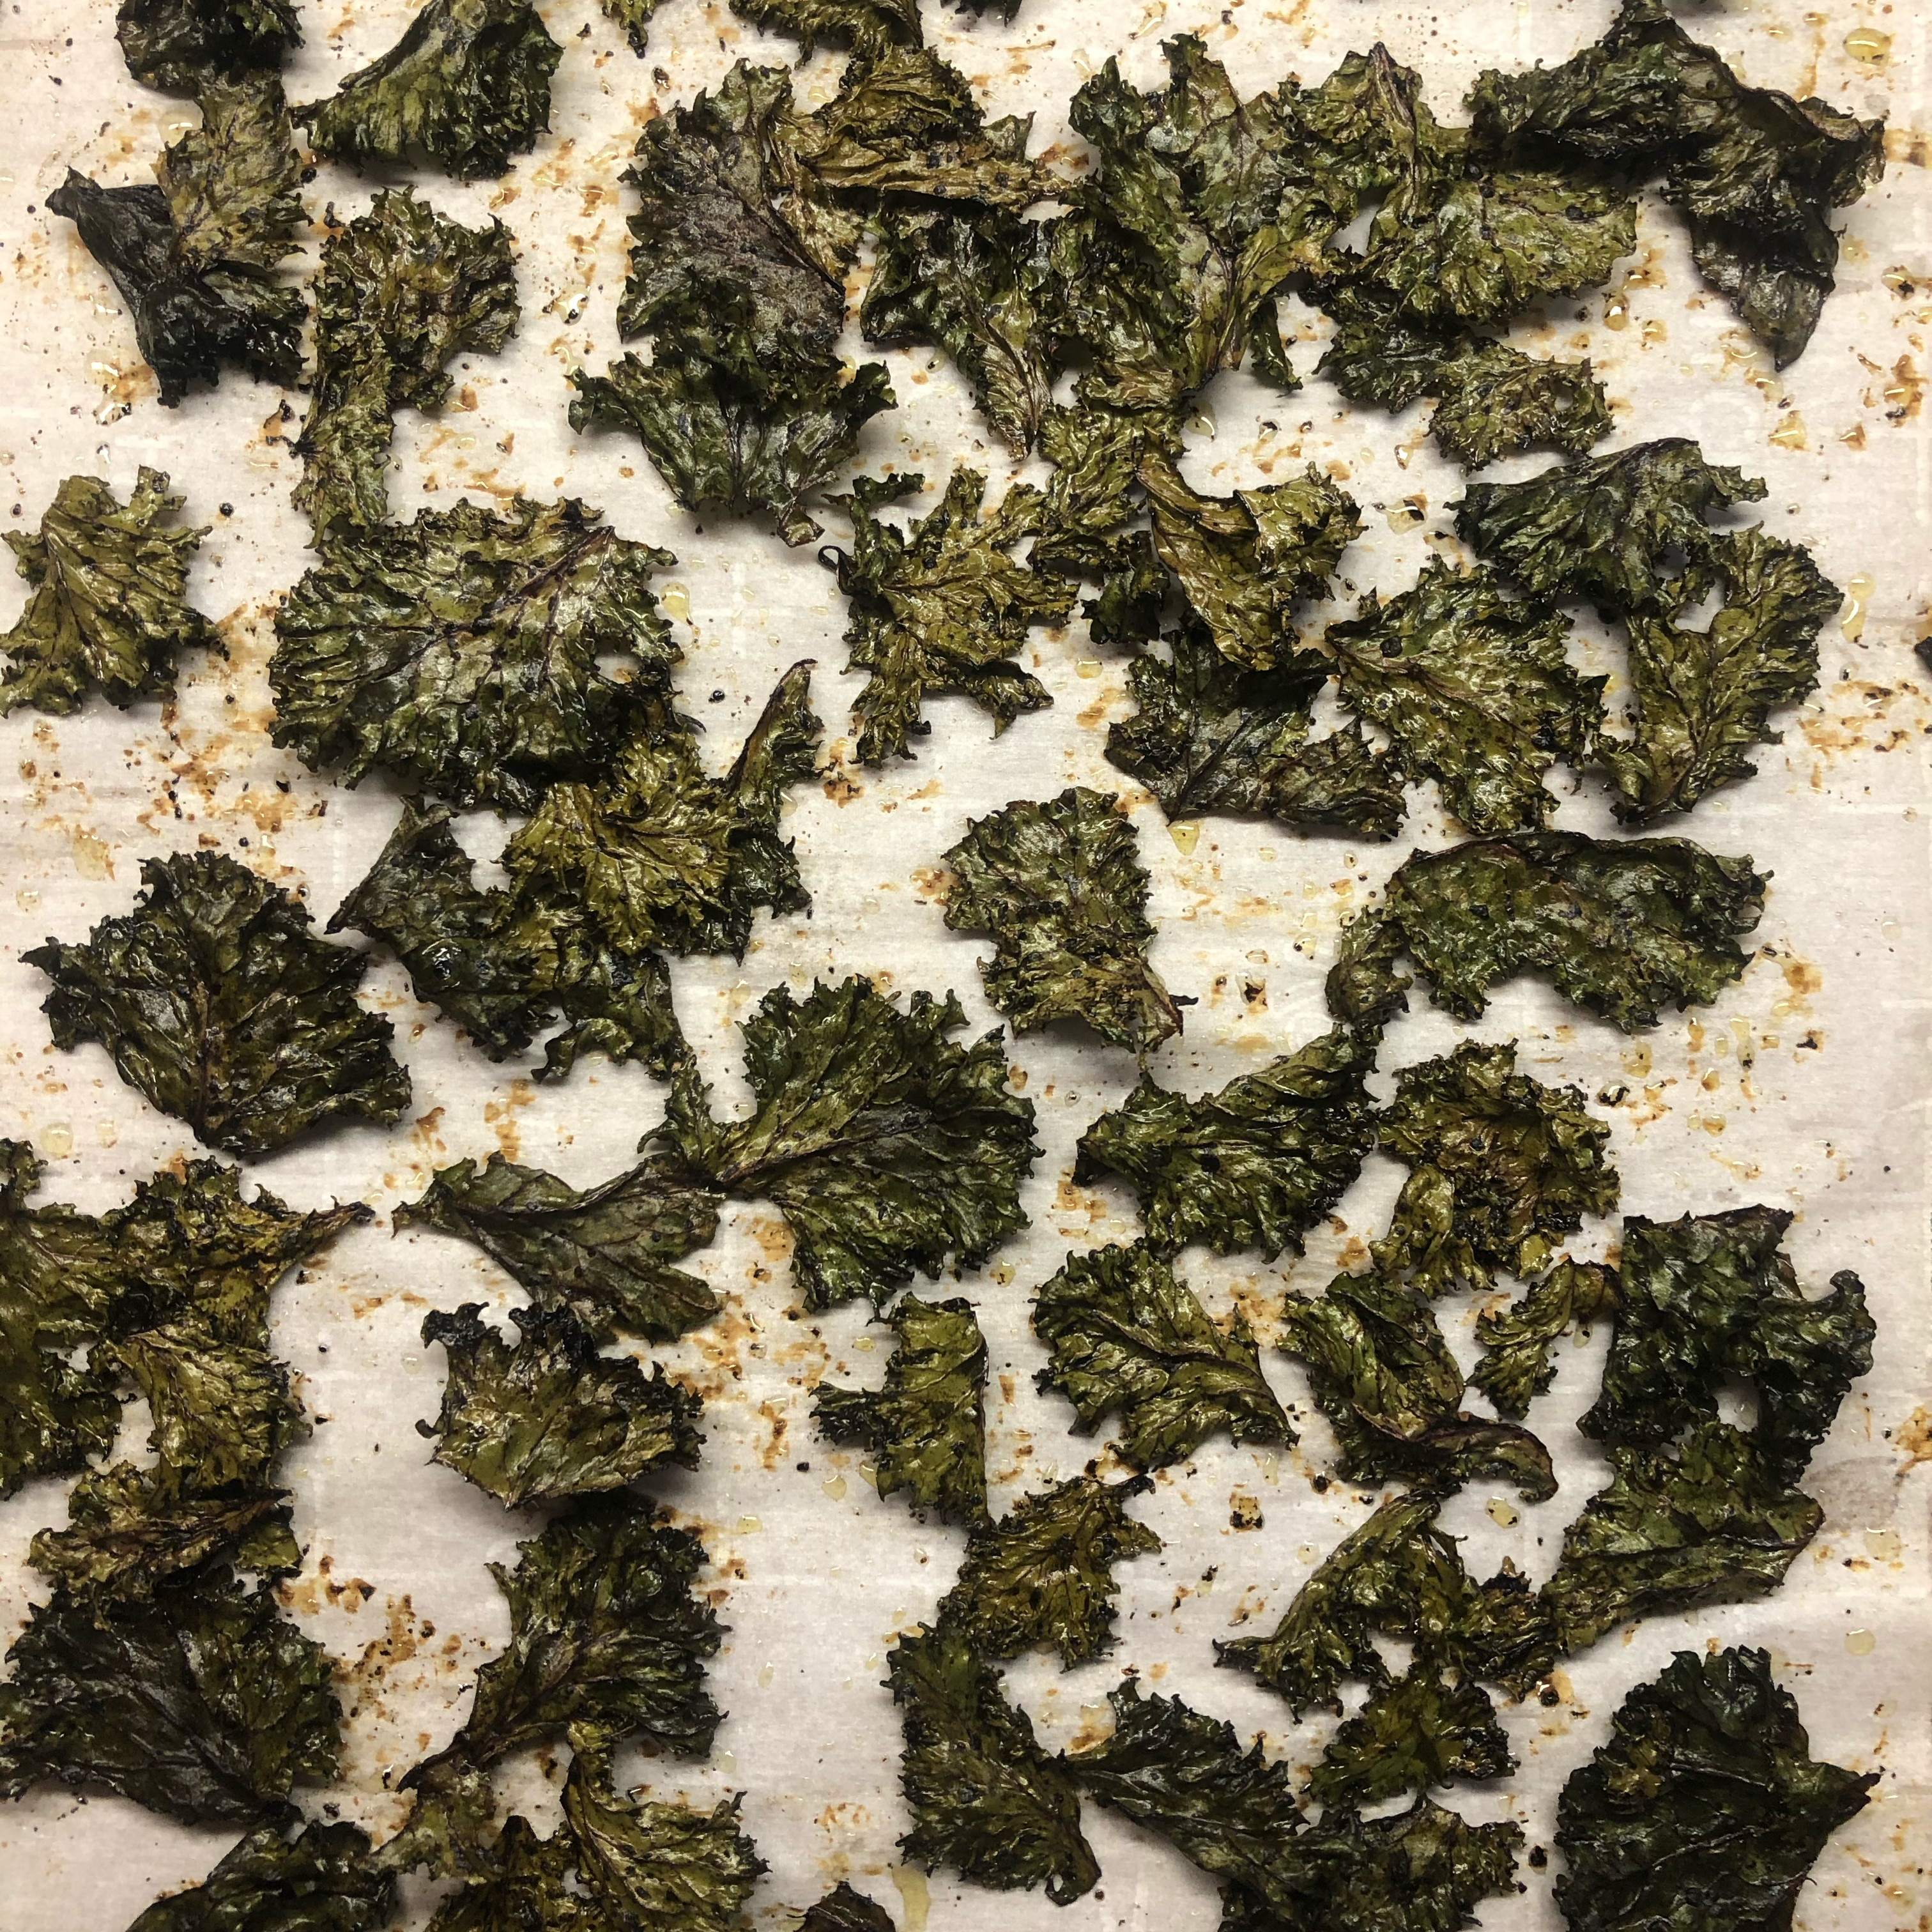 Baked Kale Chips 